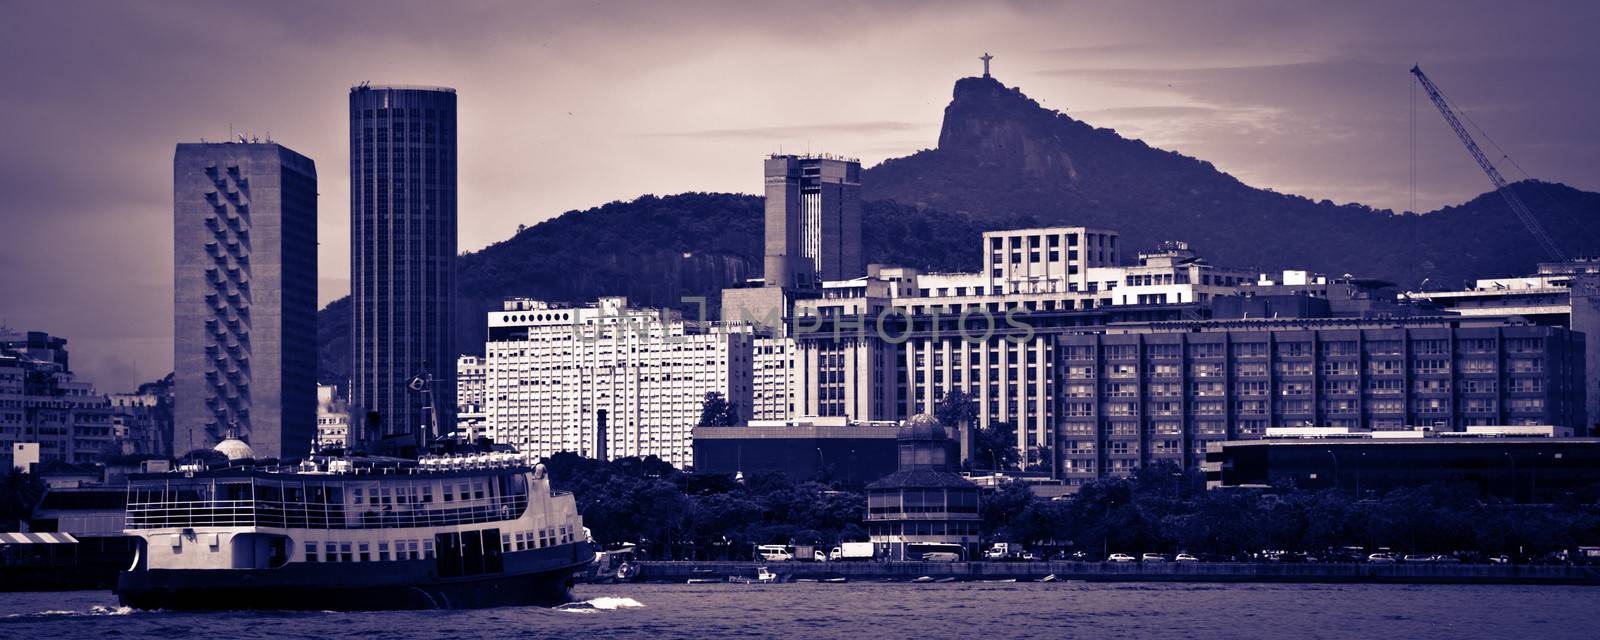 Rio de Janeiro skyline by CelsoDiniz